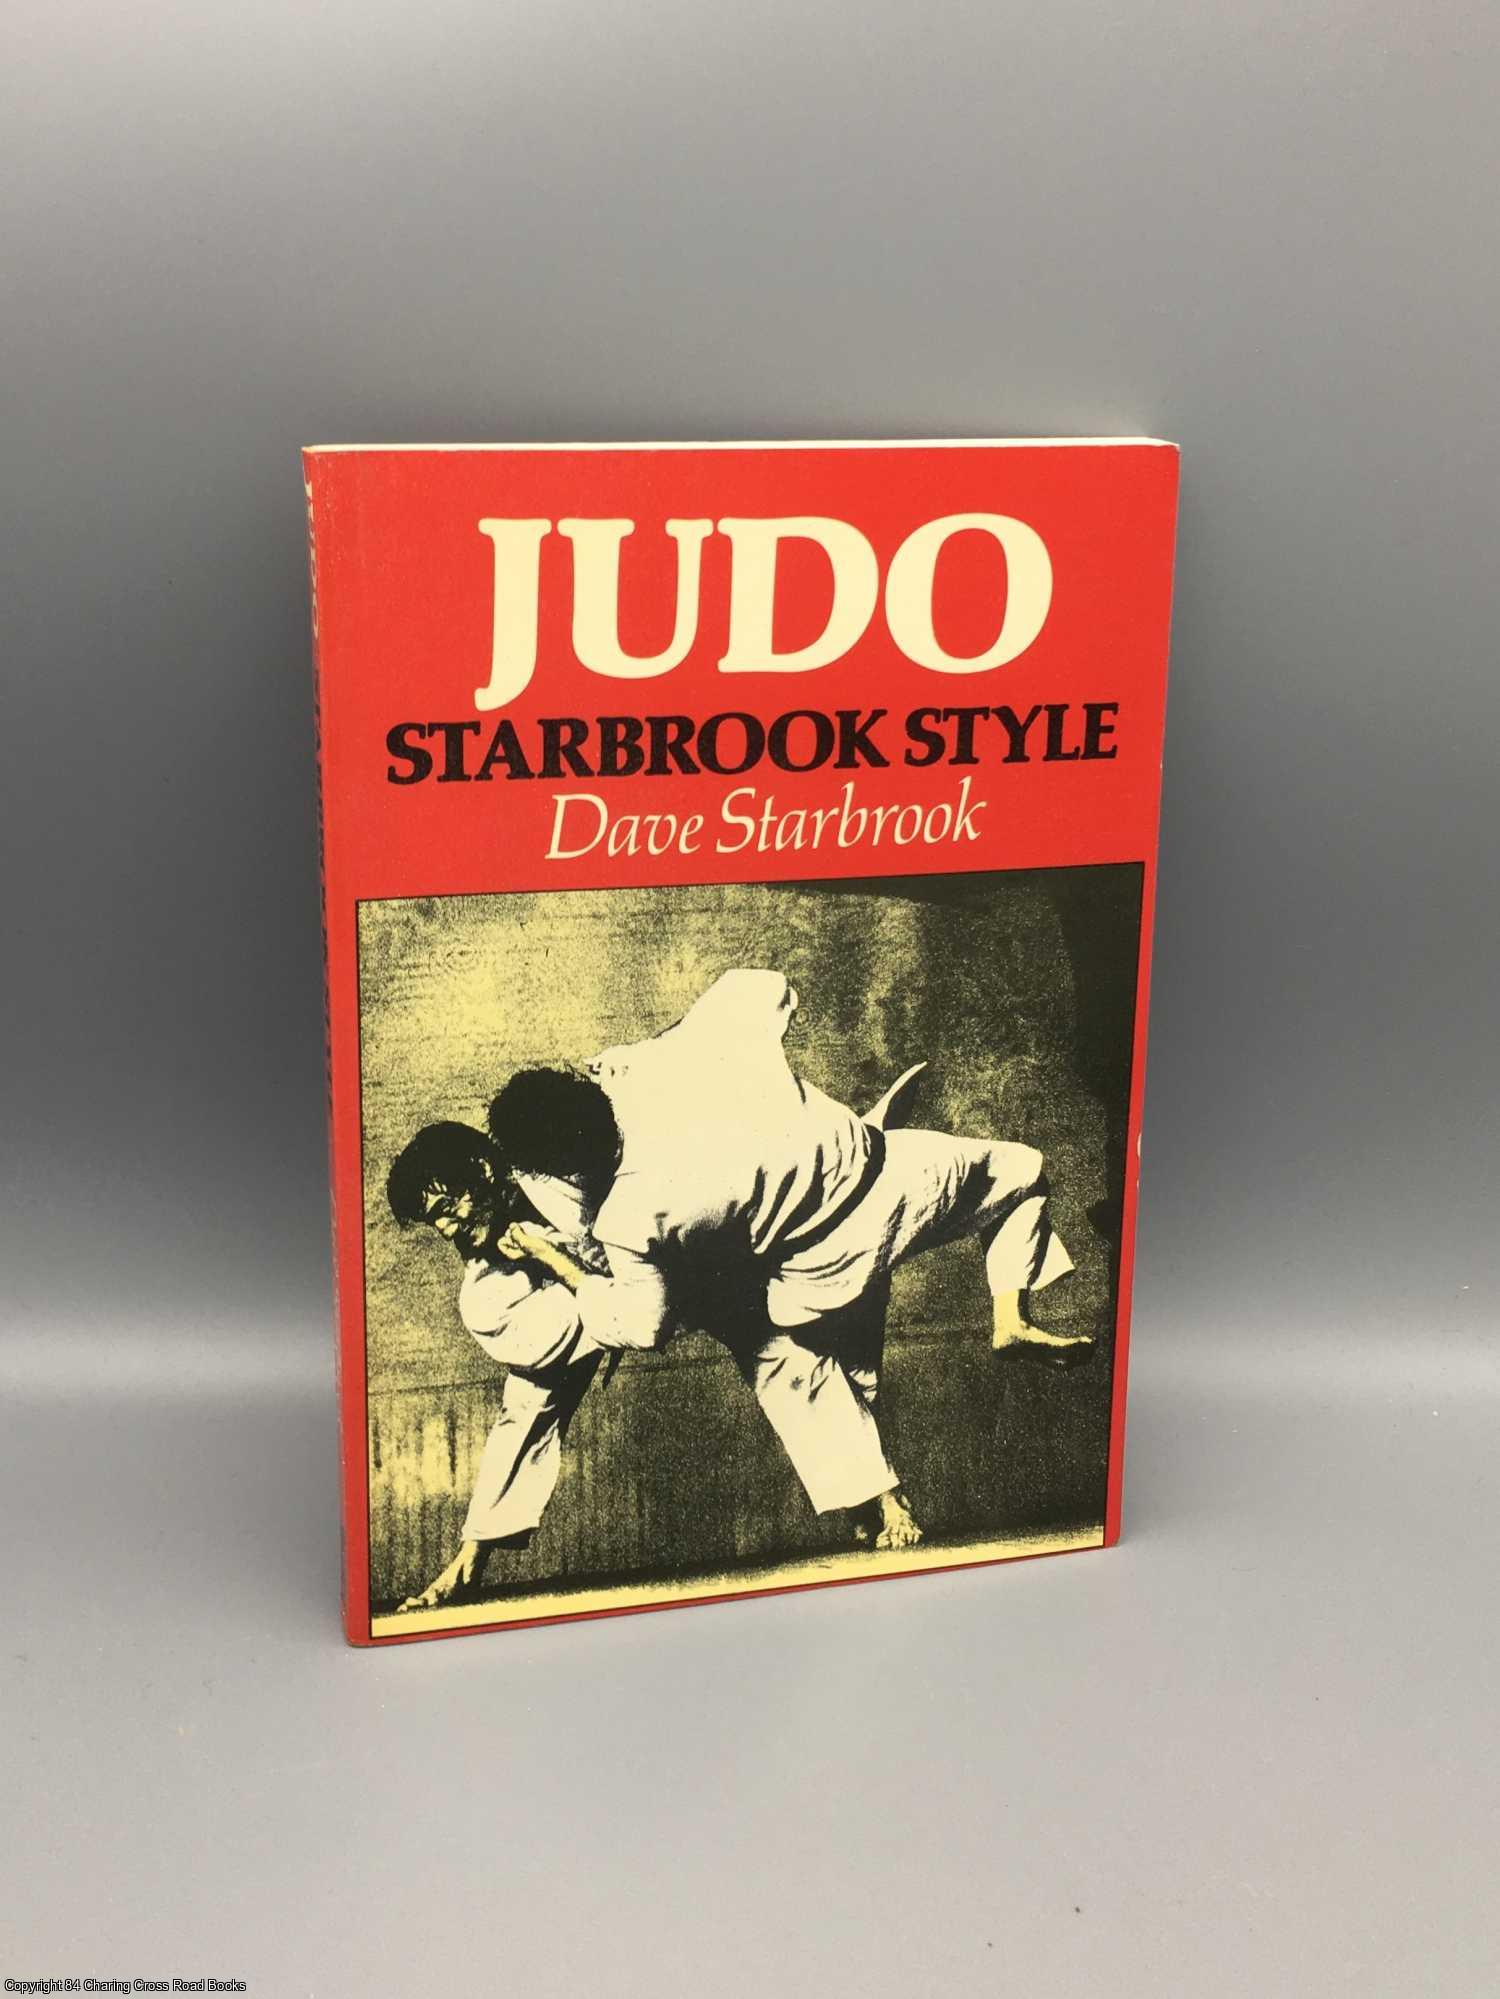 Starbrook, Dave - Judo Starbrook Style